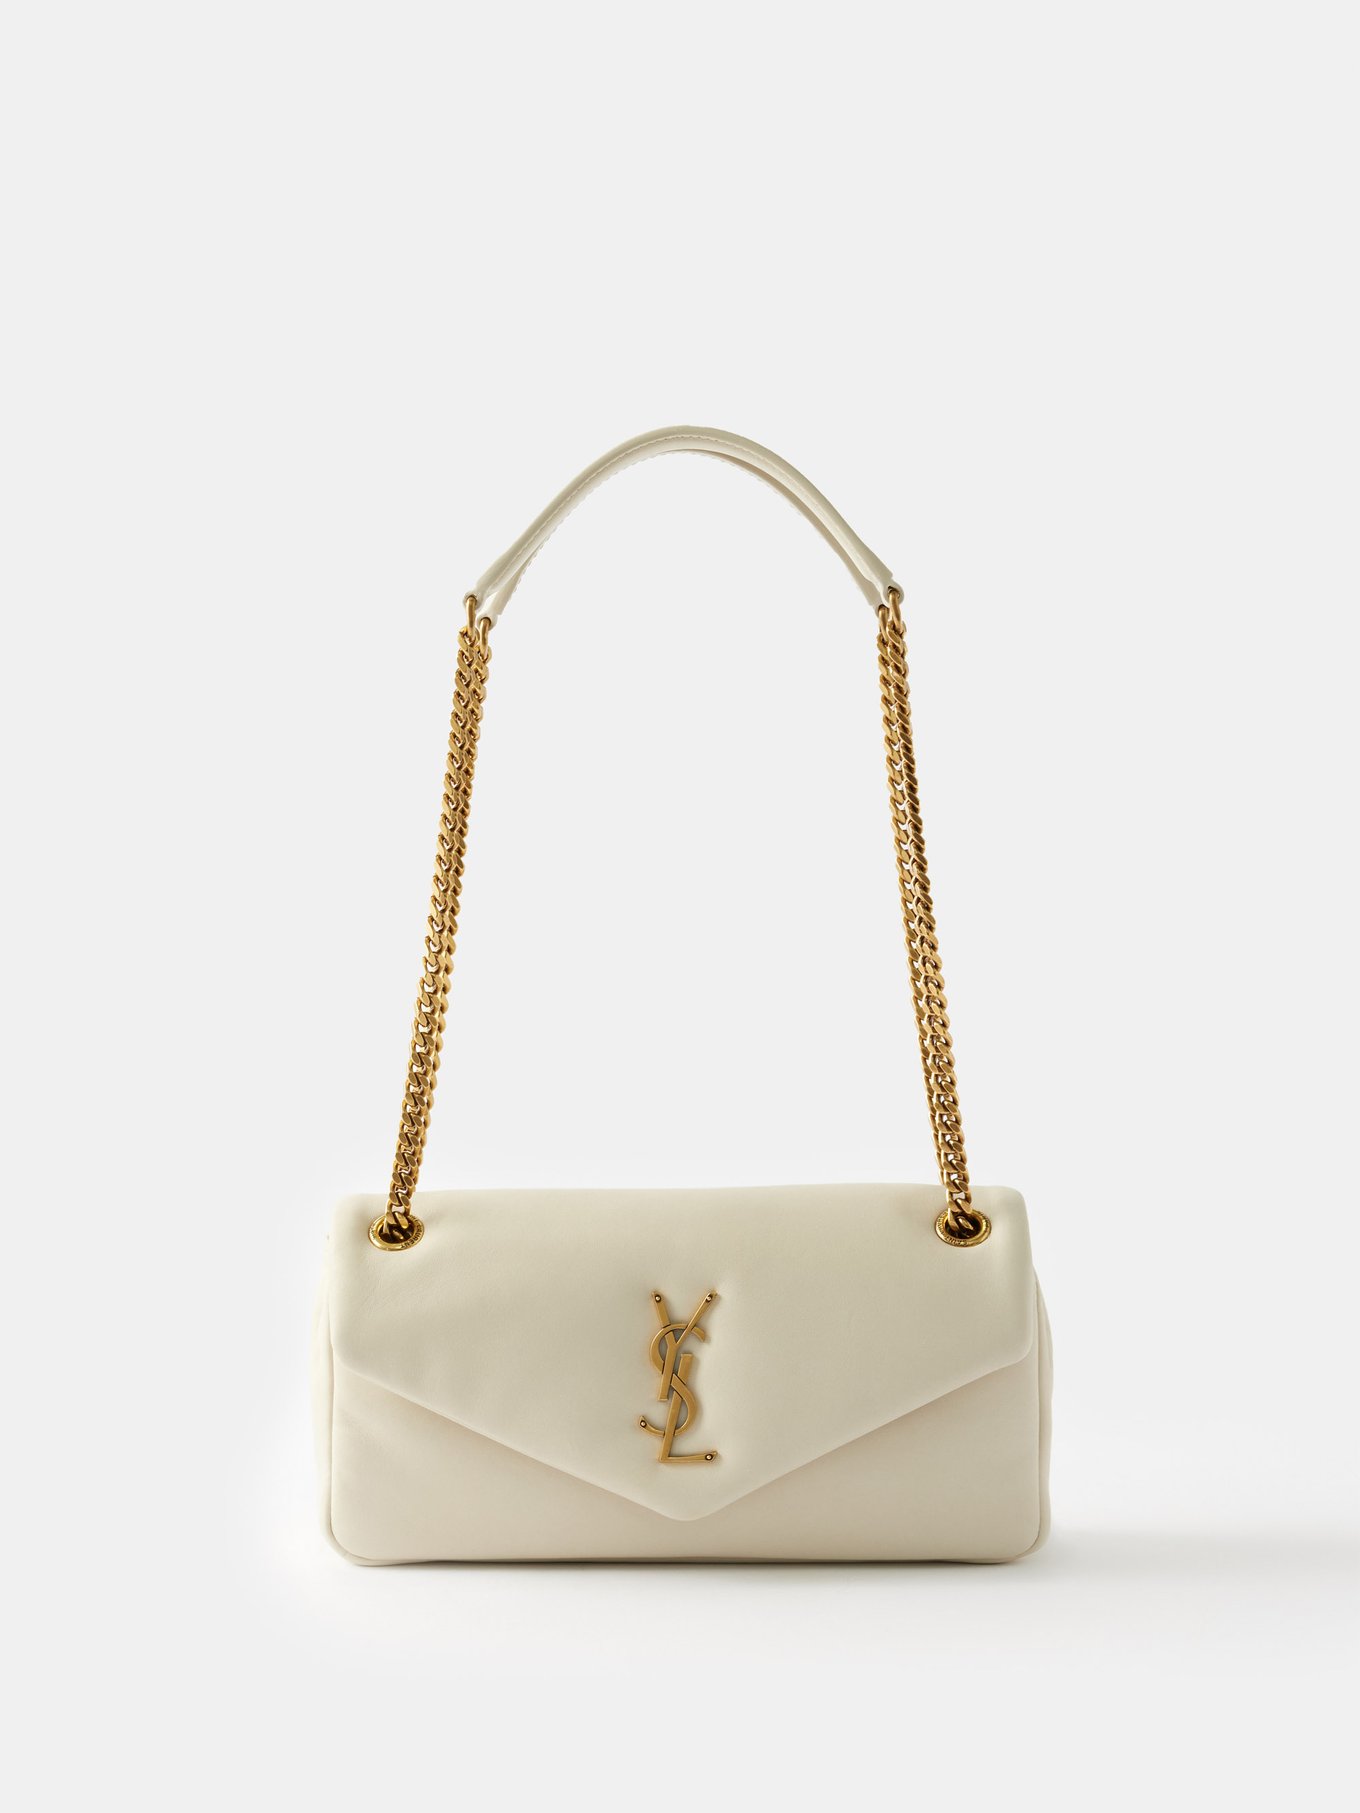 Rent Louis Vuitton Handbags, Jewelry & Sunglasses - Bag Borrow or